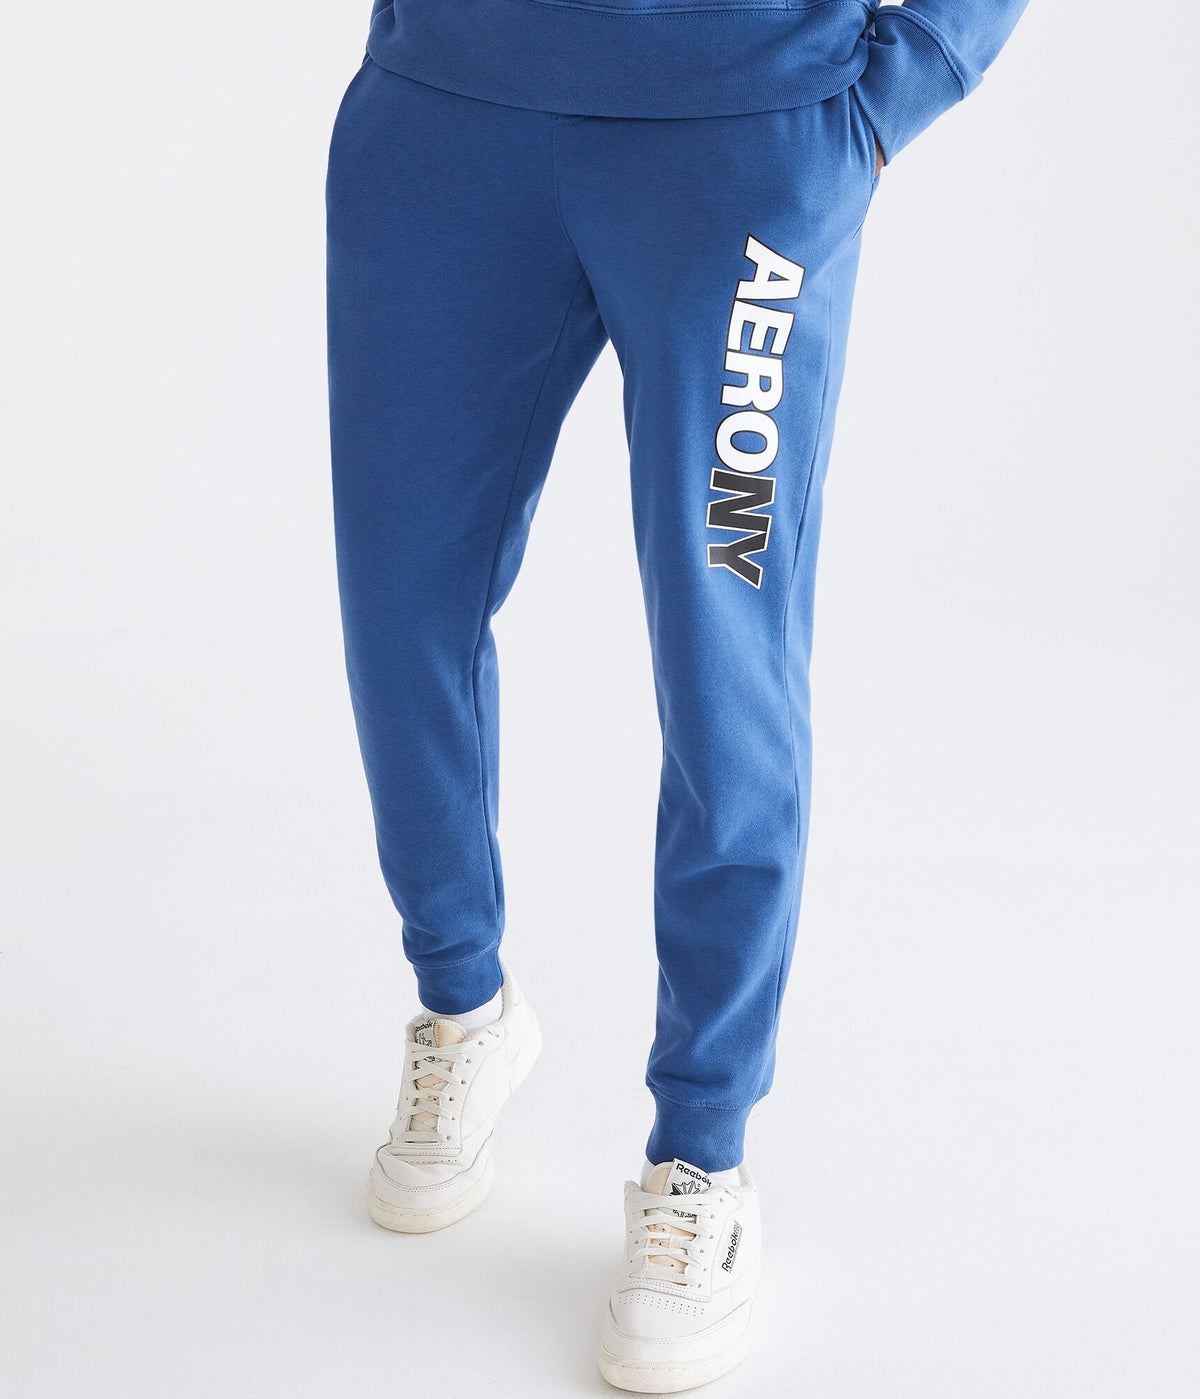 Aeropostale Mens' NY Jogger Sweatpants - Navy Blue - Size S - Cotton - Teen Fashion & Clothing Indigo Ink